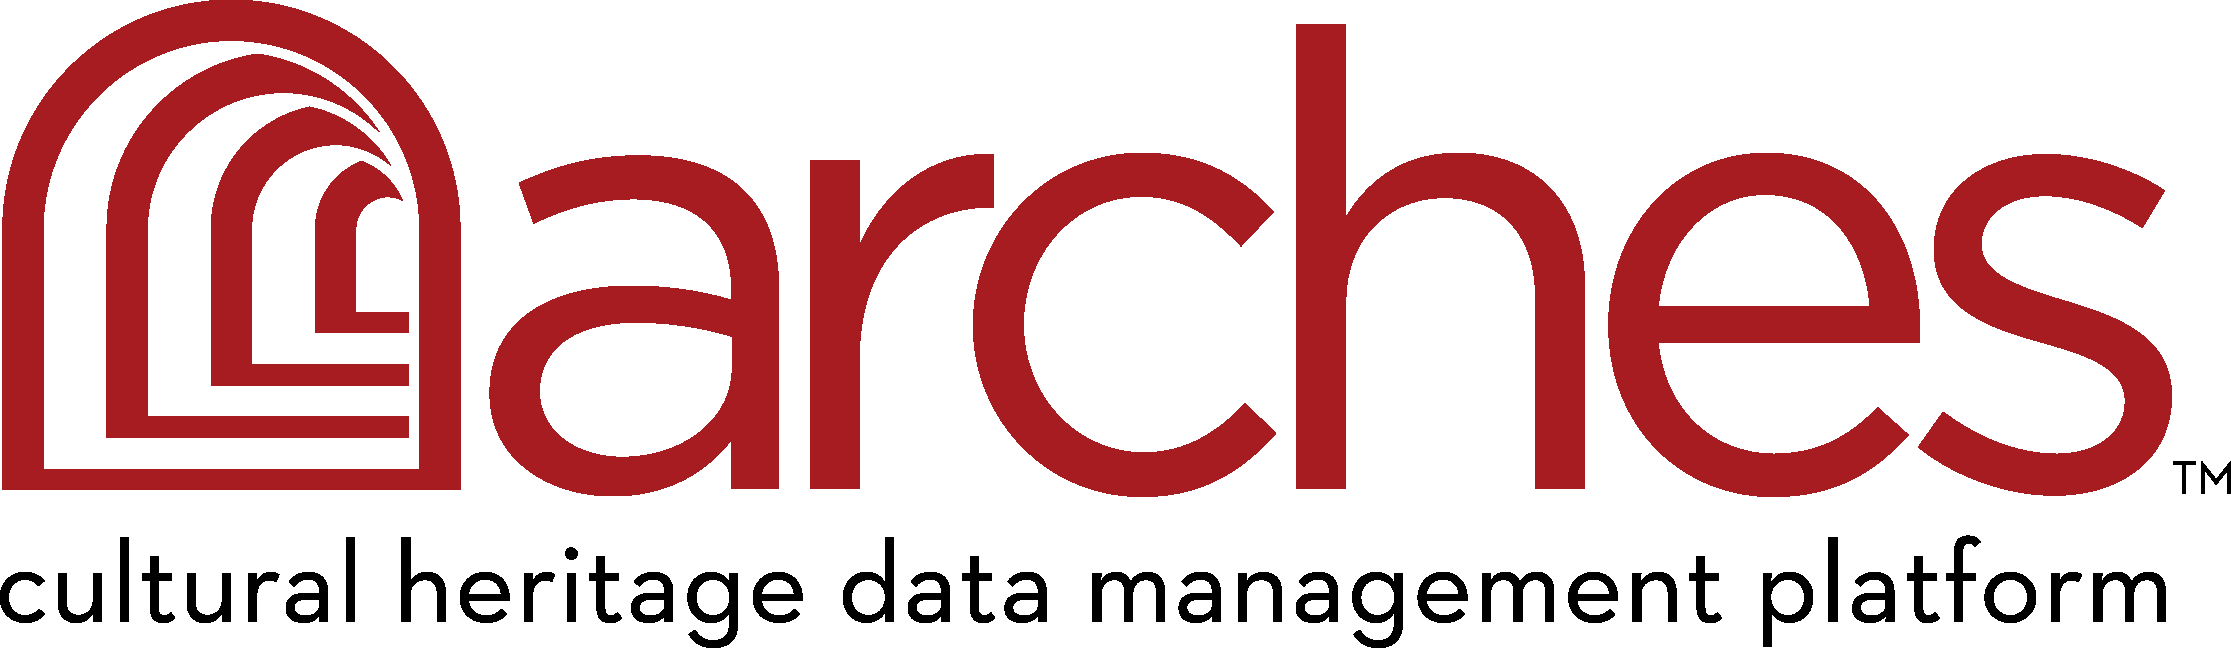 Arches logo. Text reads: Arches TM cultural heritage data management platform